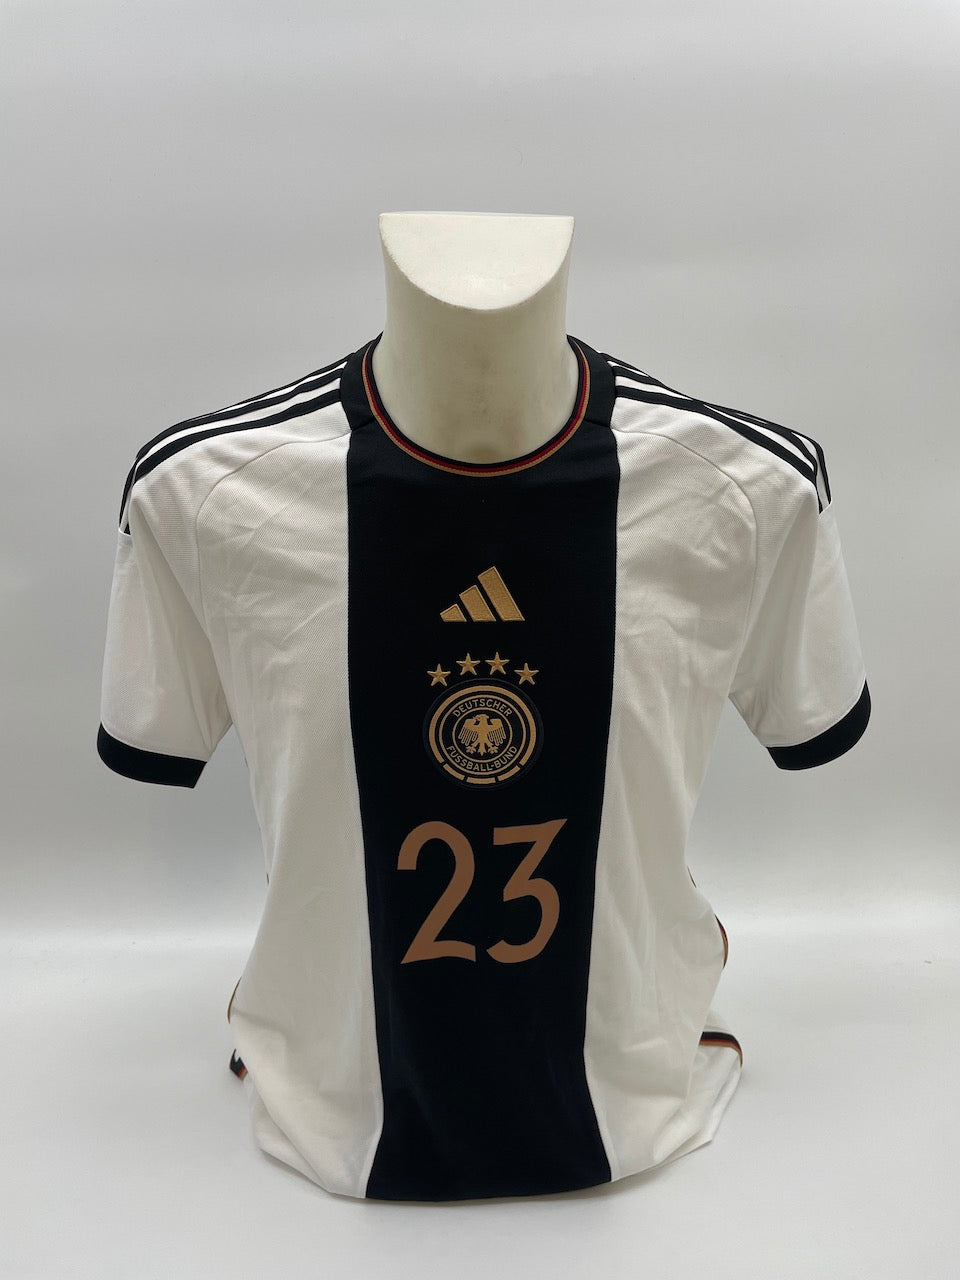 DFB Trikot Nico Schlotterbeck signiert Adidas COA Deutschland DFB Autogramm M